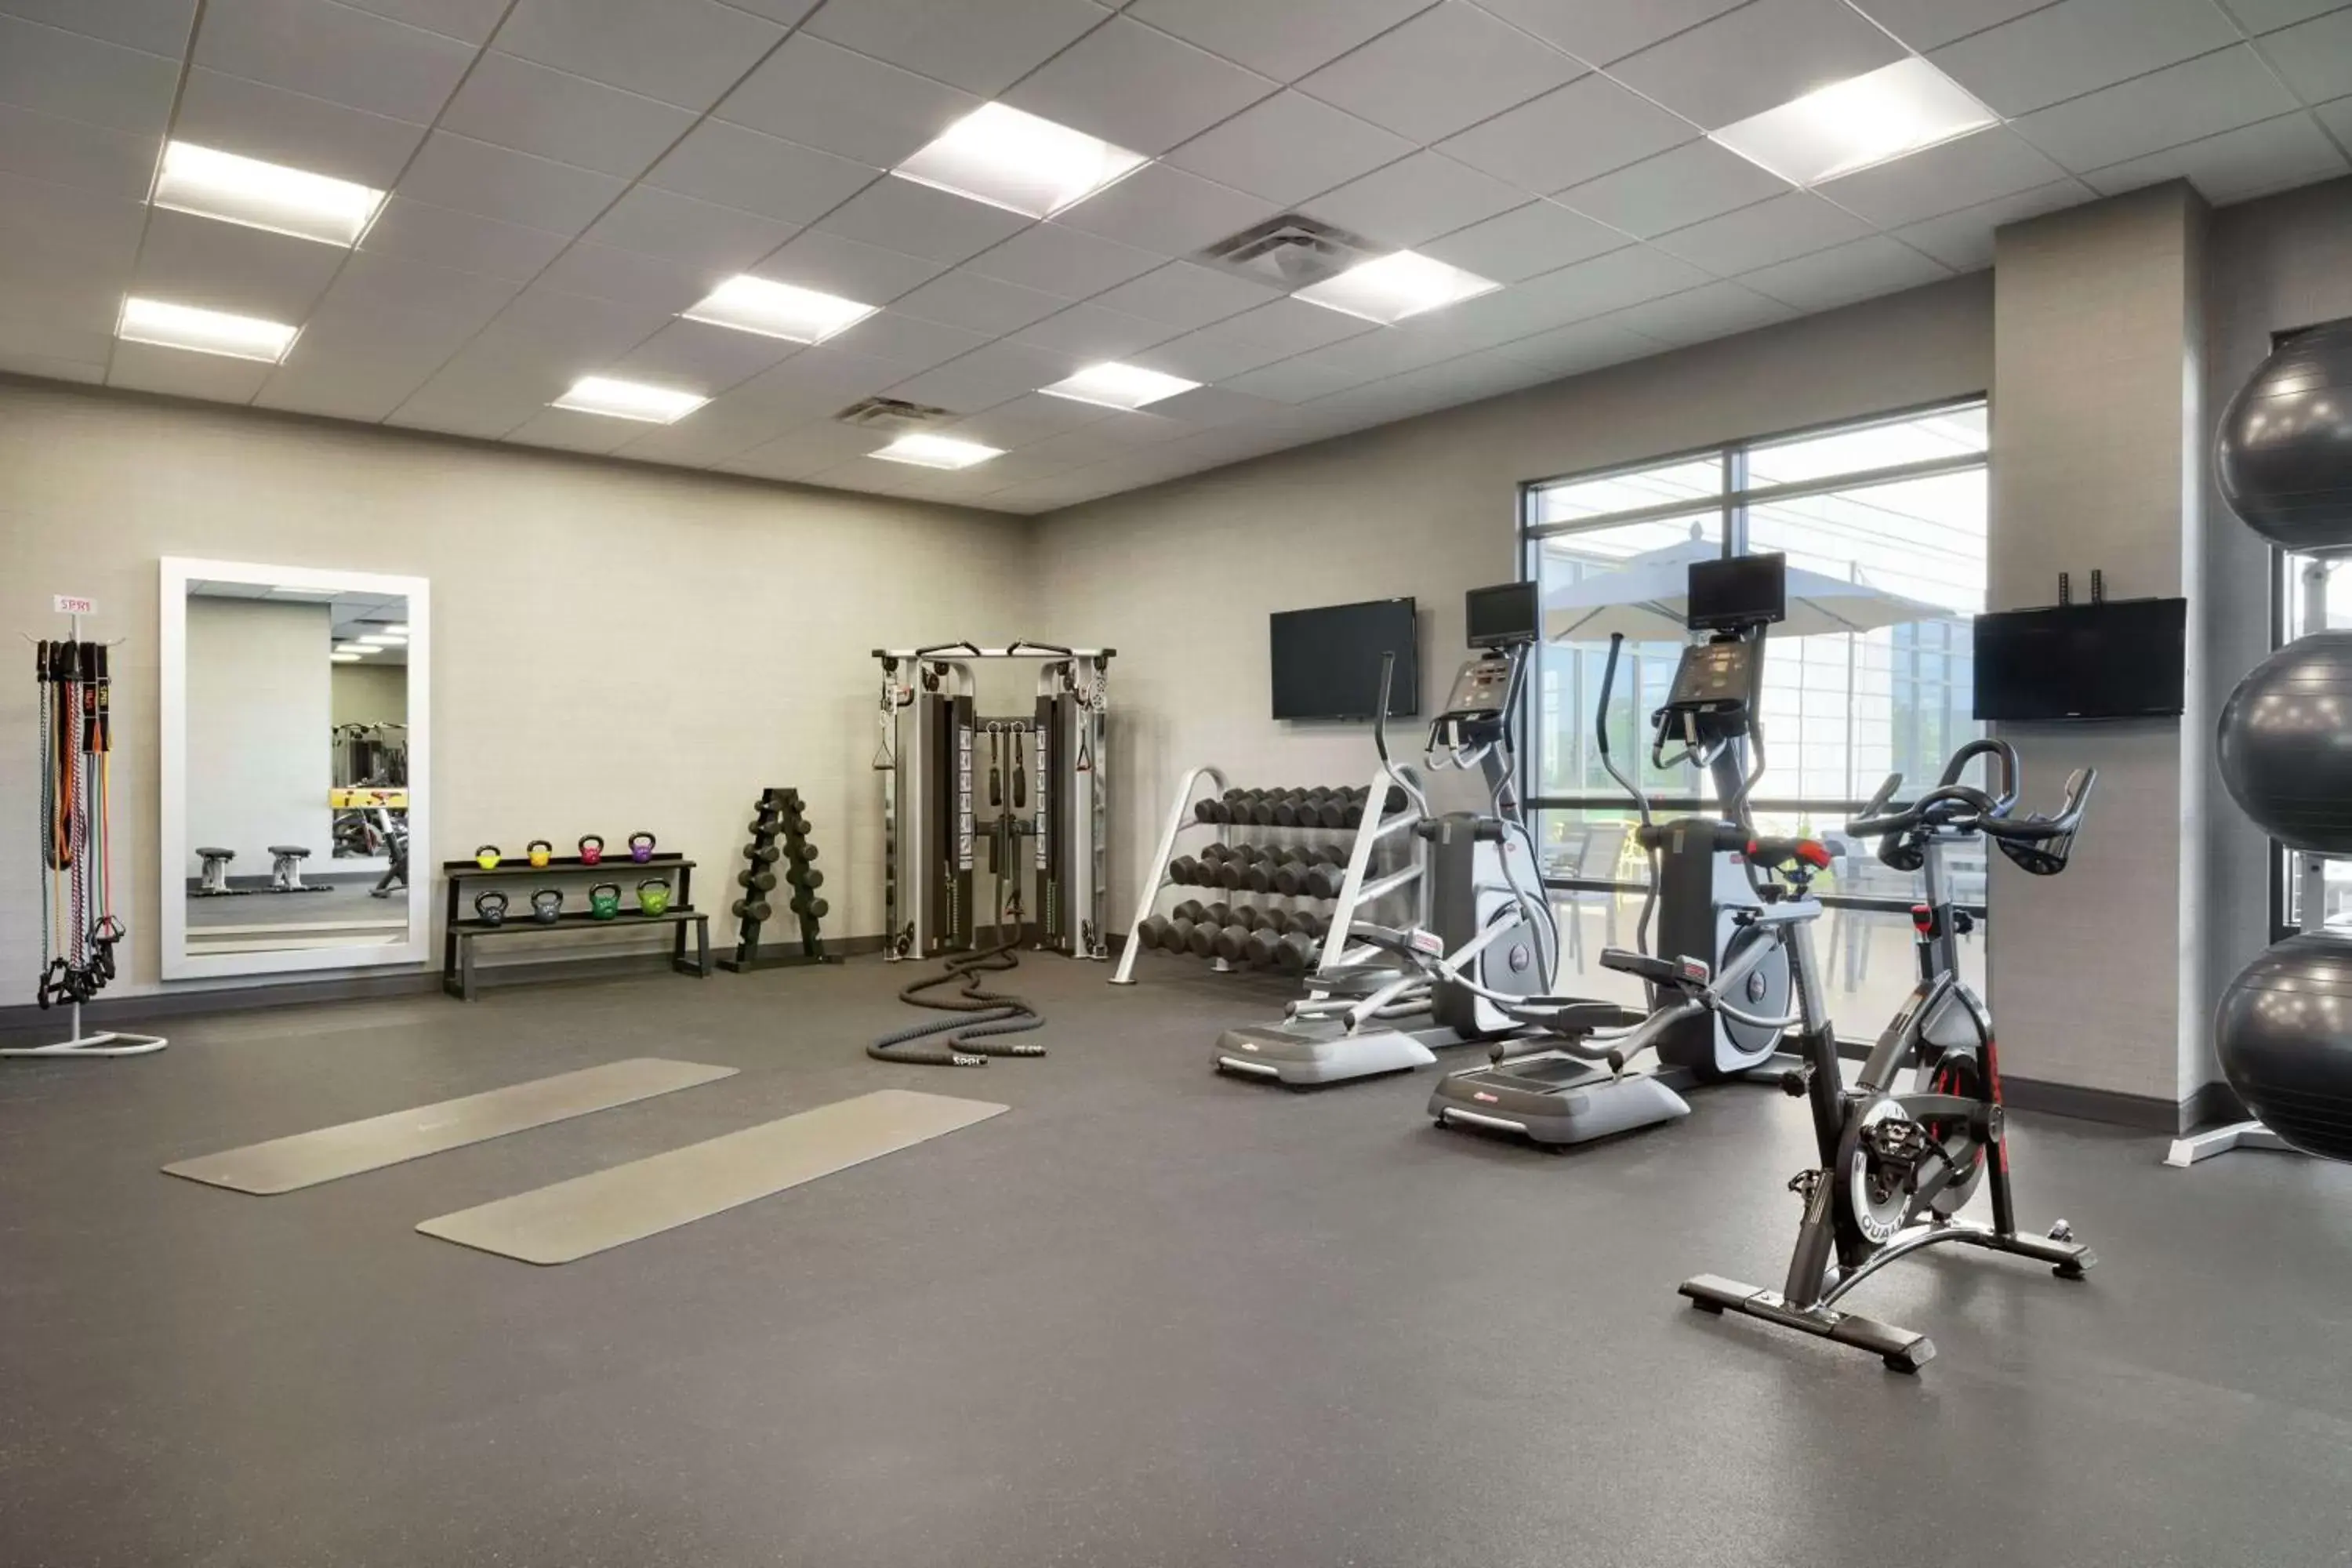 Fitness centre/facilities, Fitness Center/Facilities in Tru by Hilton Albany Crossgates Mall